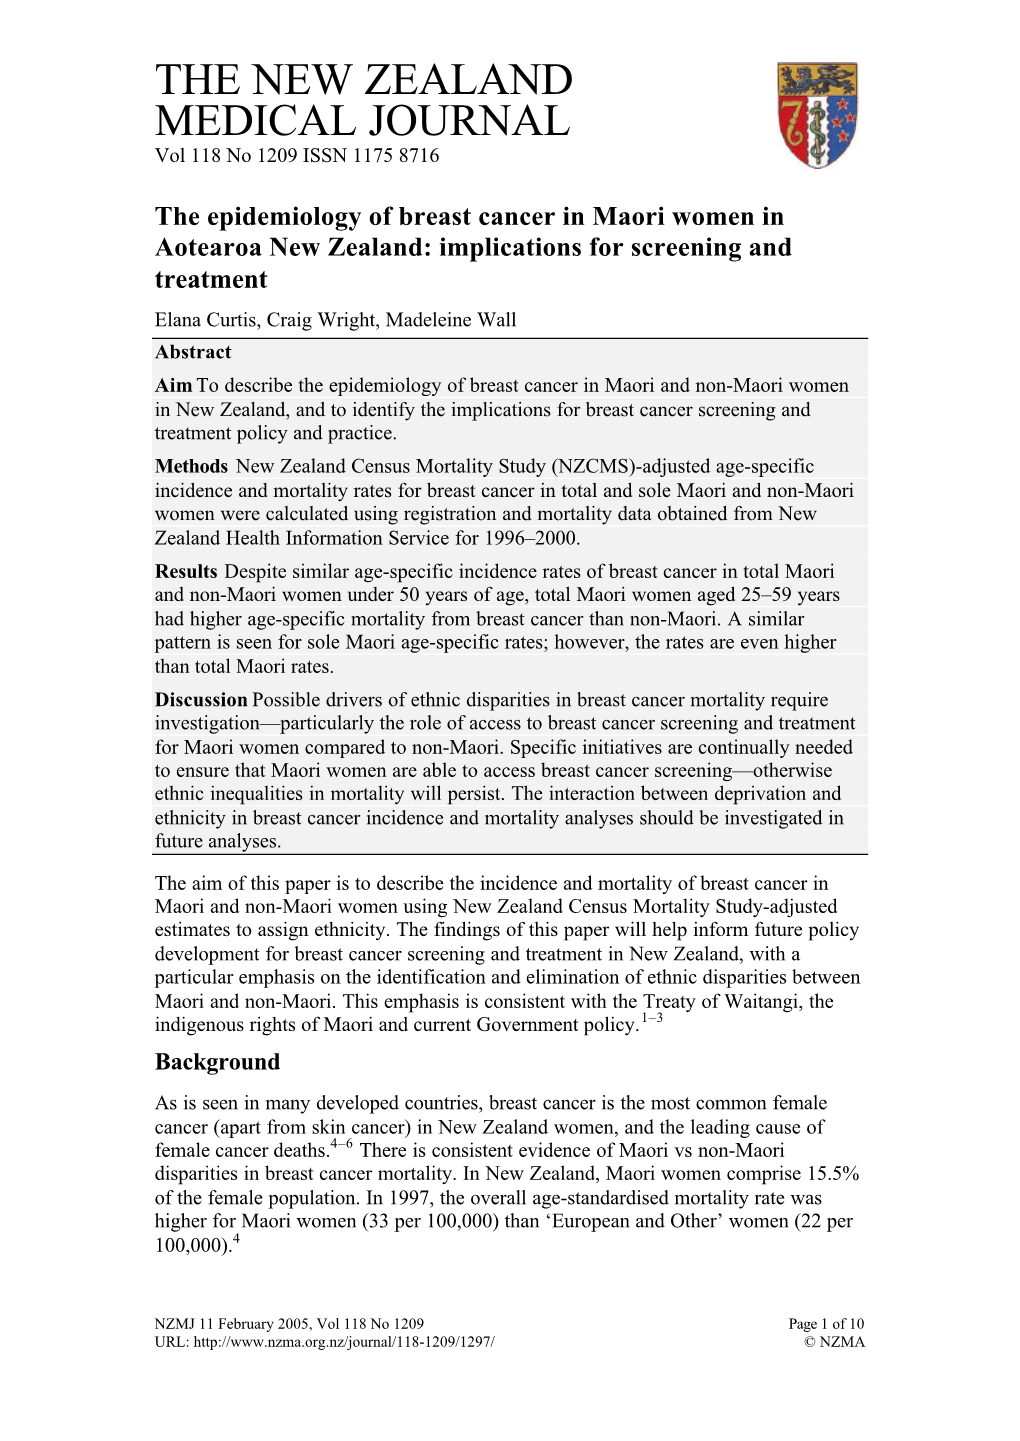 The Epidemiology of Breast Cancer in Maori Women in Aotearoa New Zealand